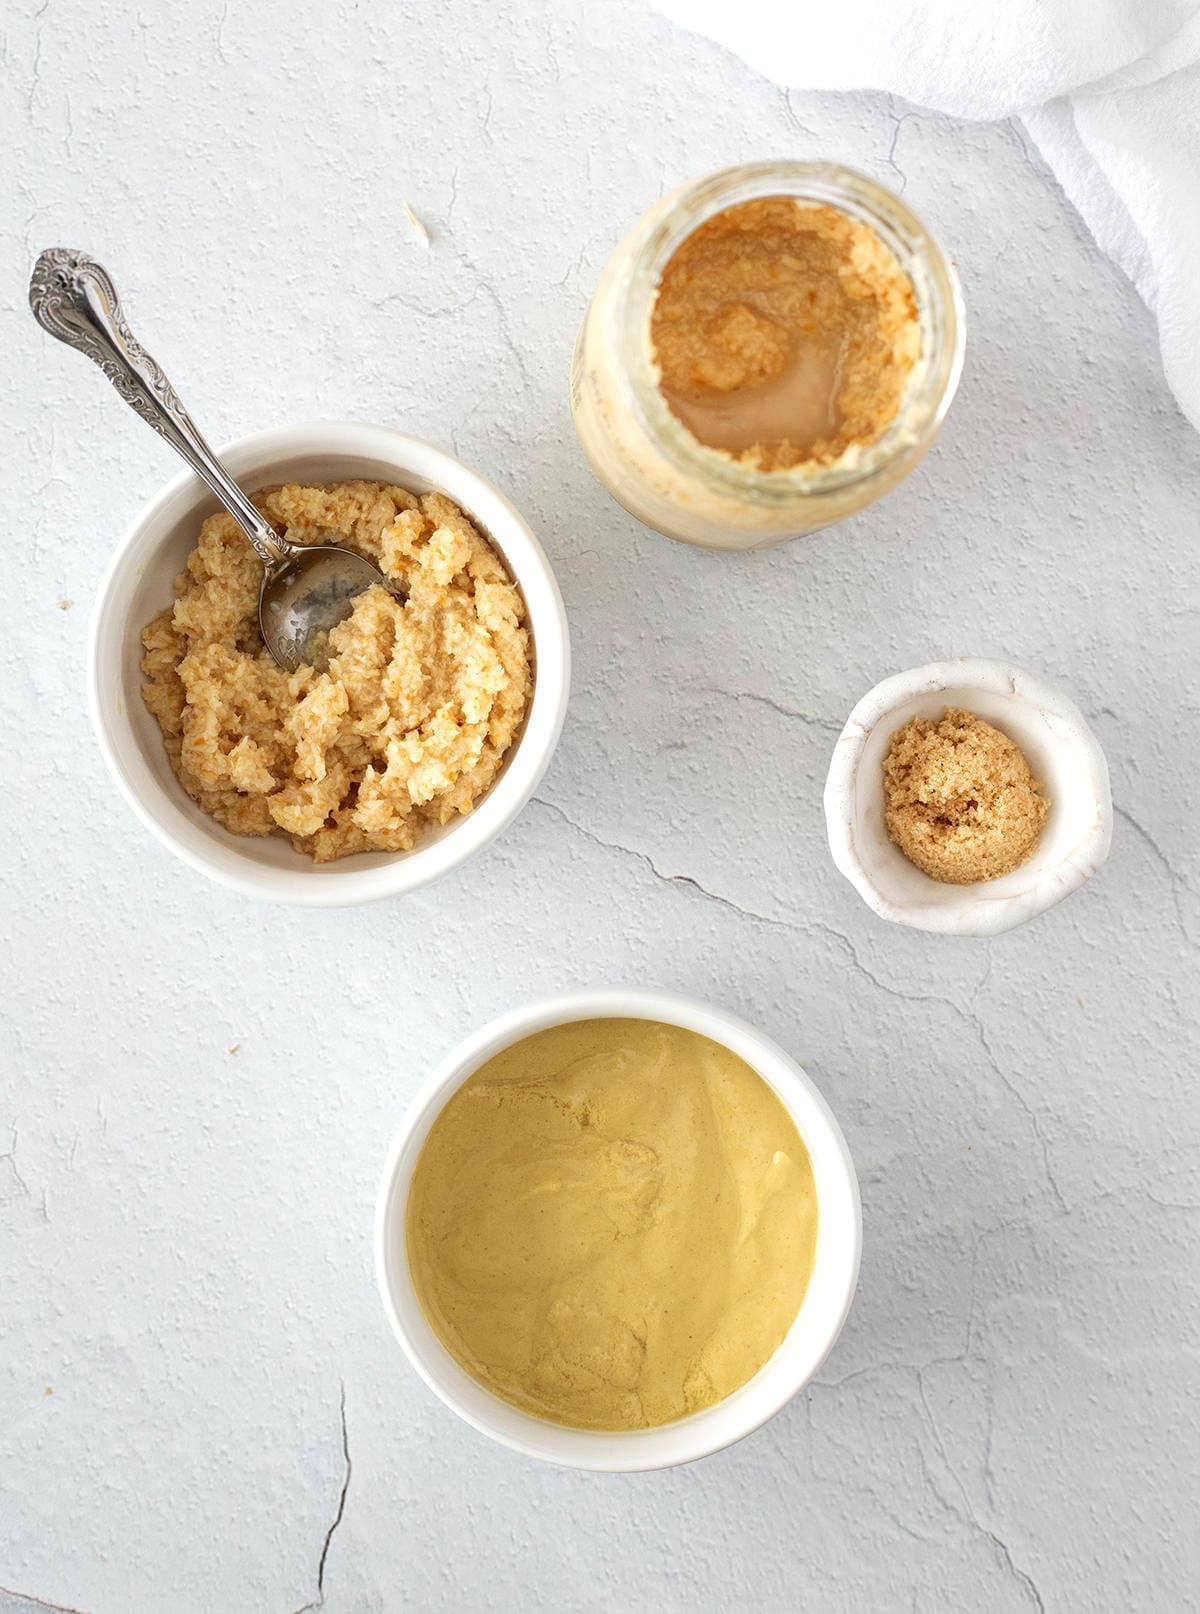 Ingredients to make horseradish mustard sauce in small bowls.